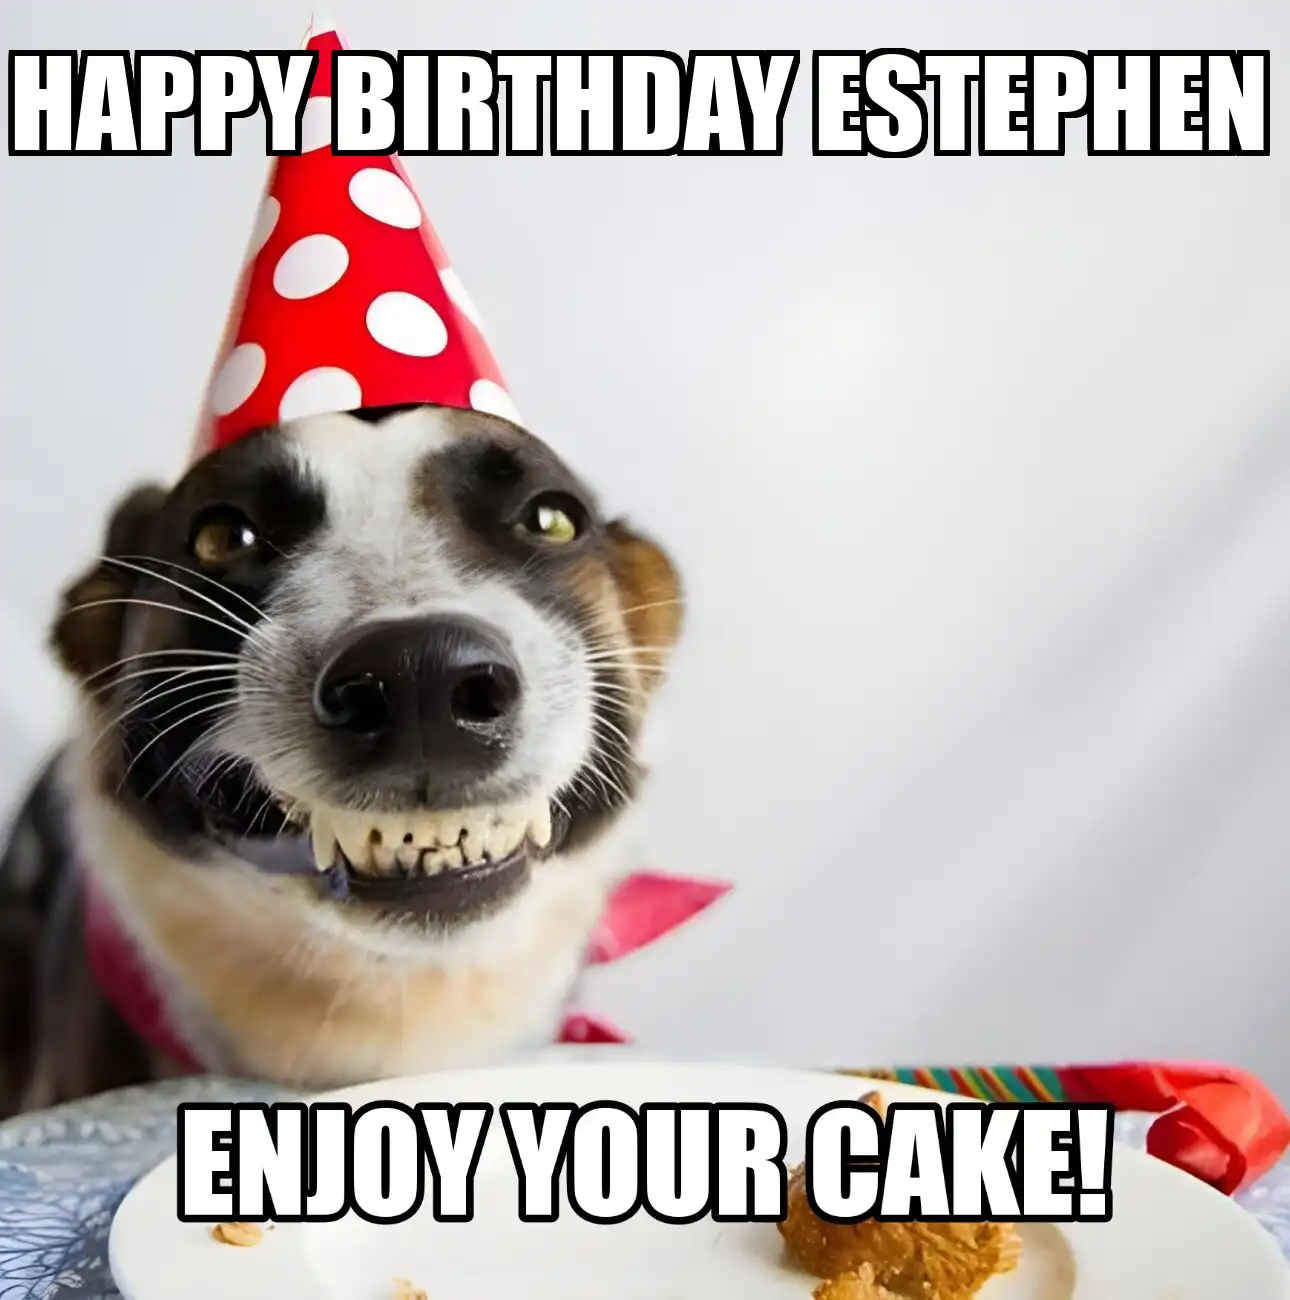 Happy Birthday Estephen Enjoy Your Cake Dog Meme